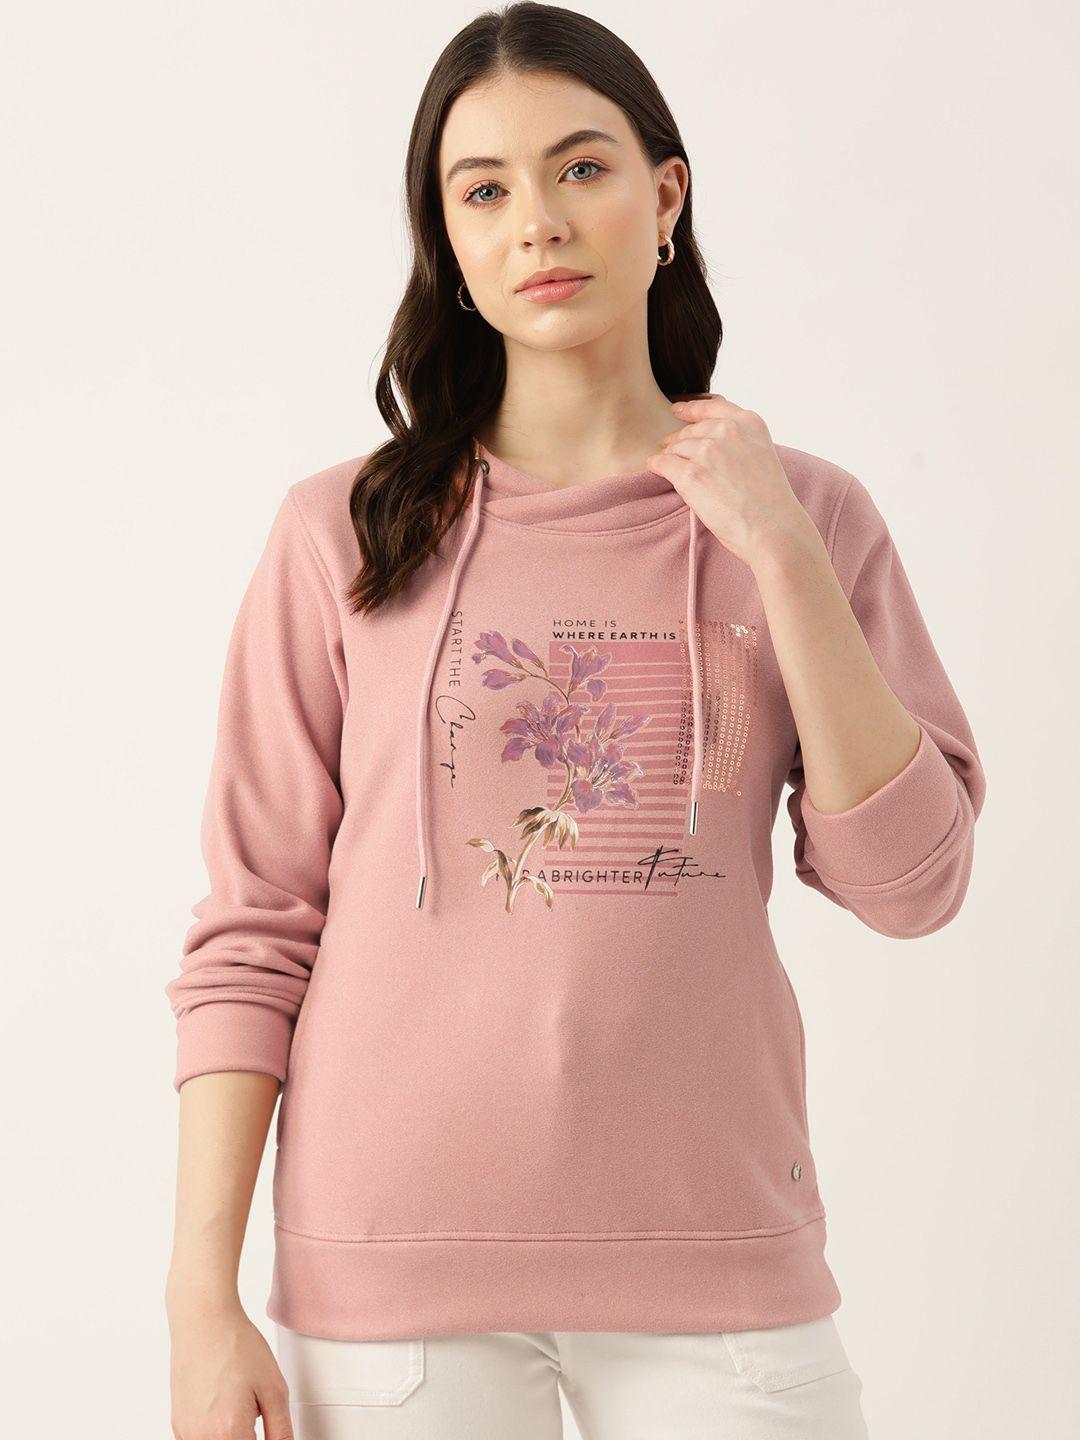 monte carlo women printed sequined sweatshirt